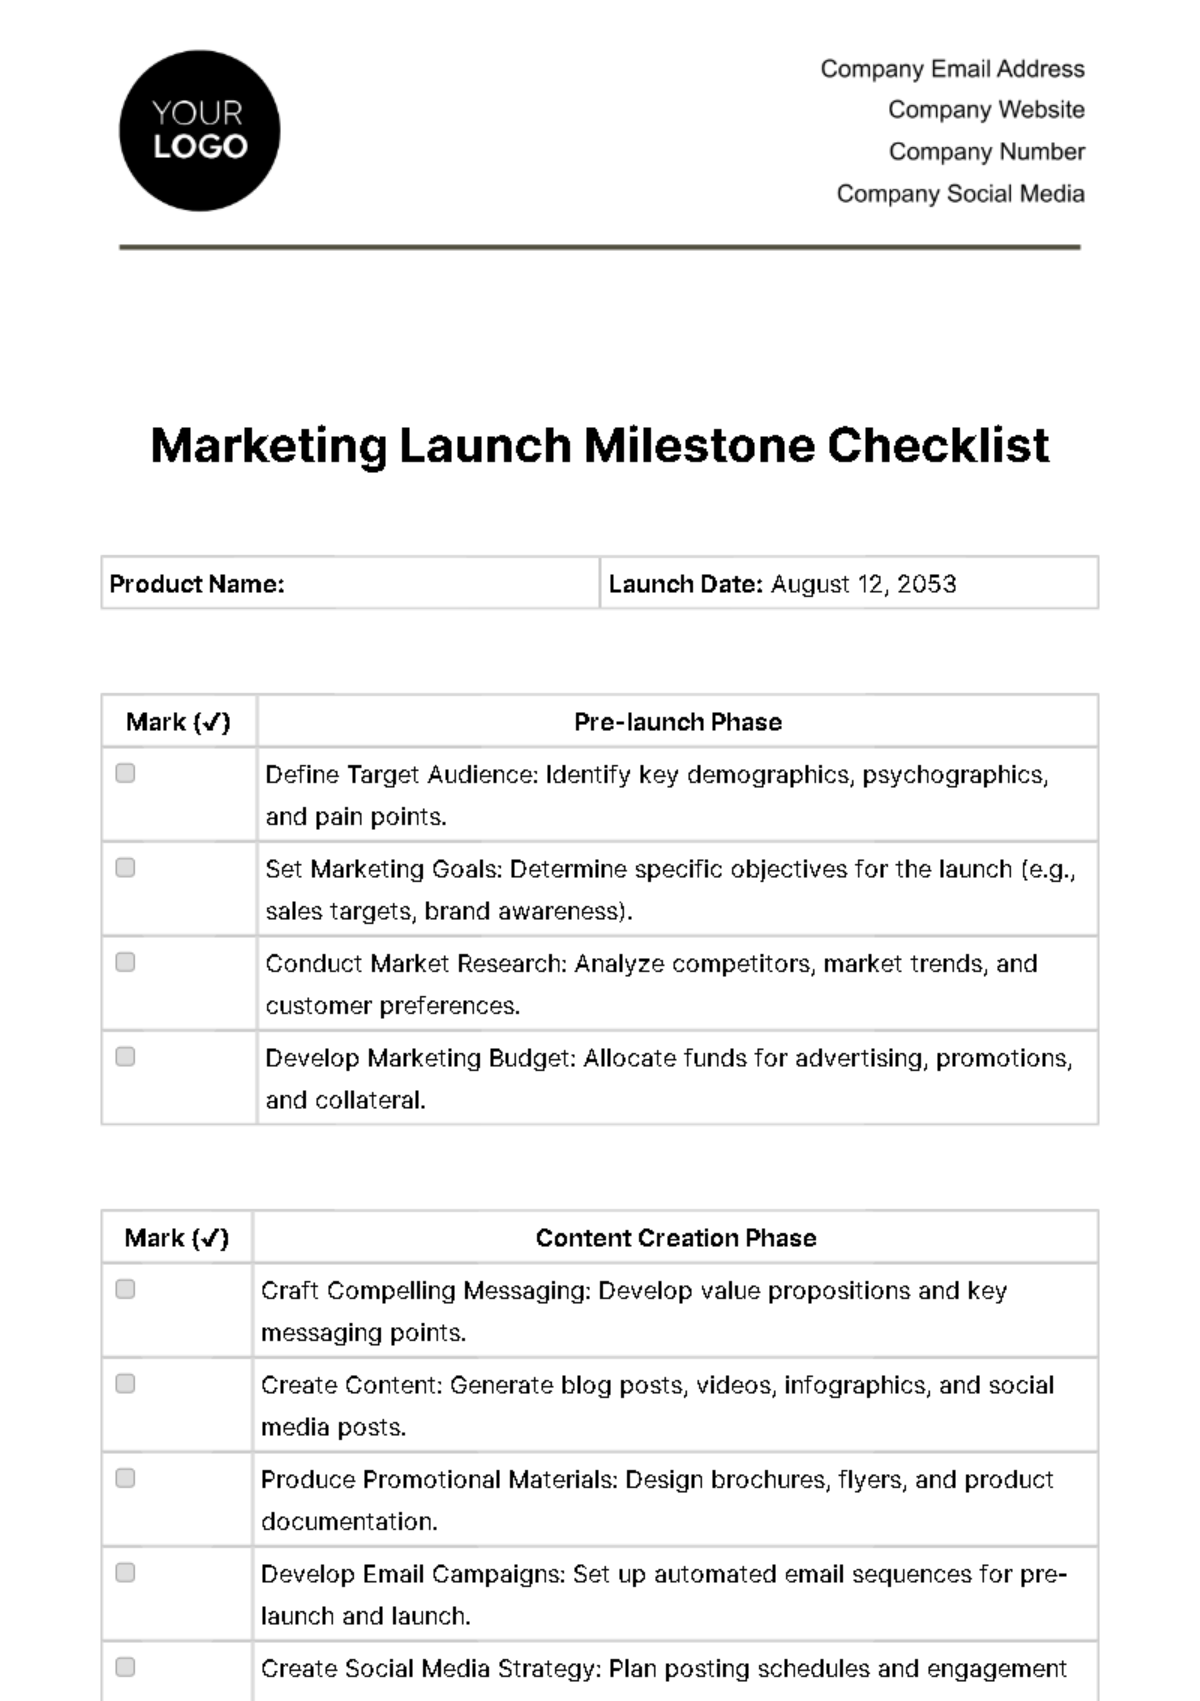 Free Marketing Launch Milestone Checklist Template